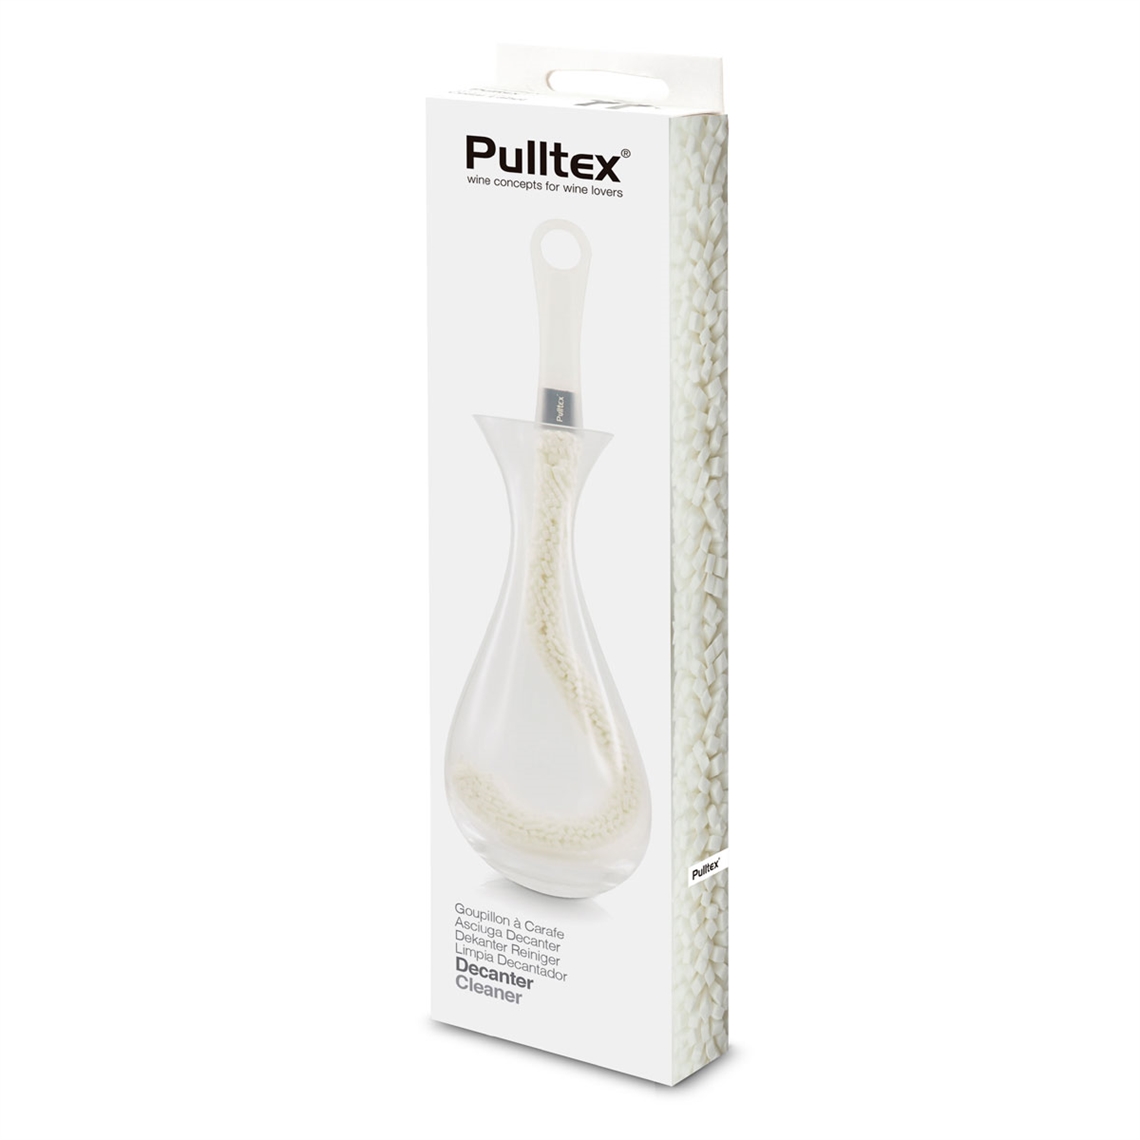 Pulltex Wine Decanter Cleaning Brush